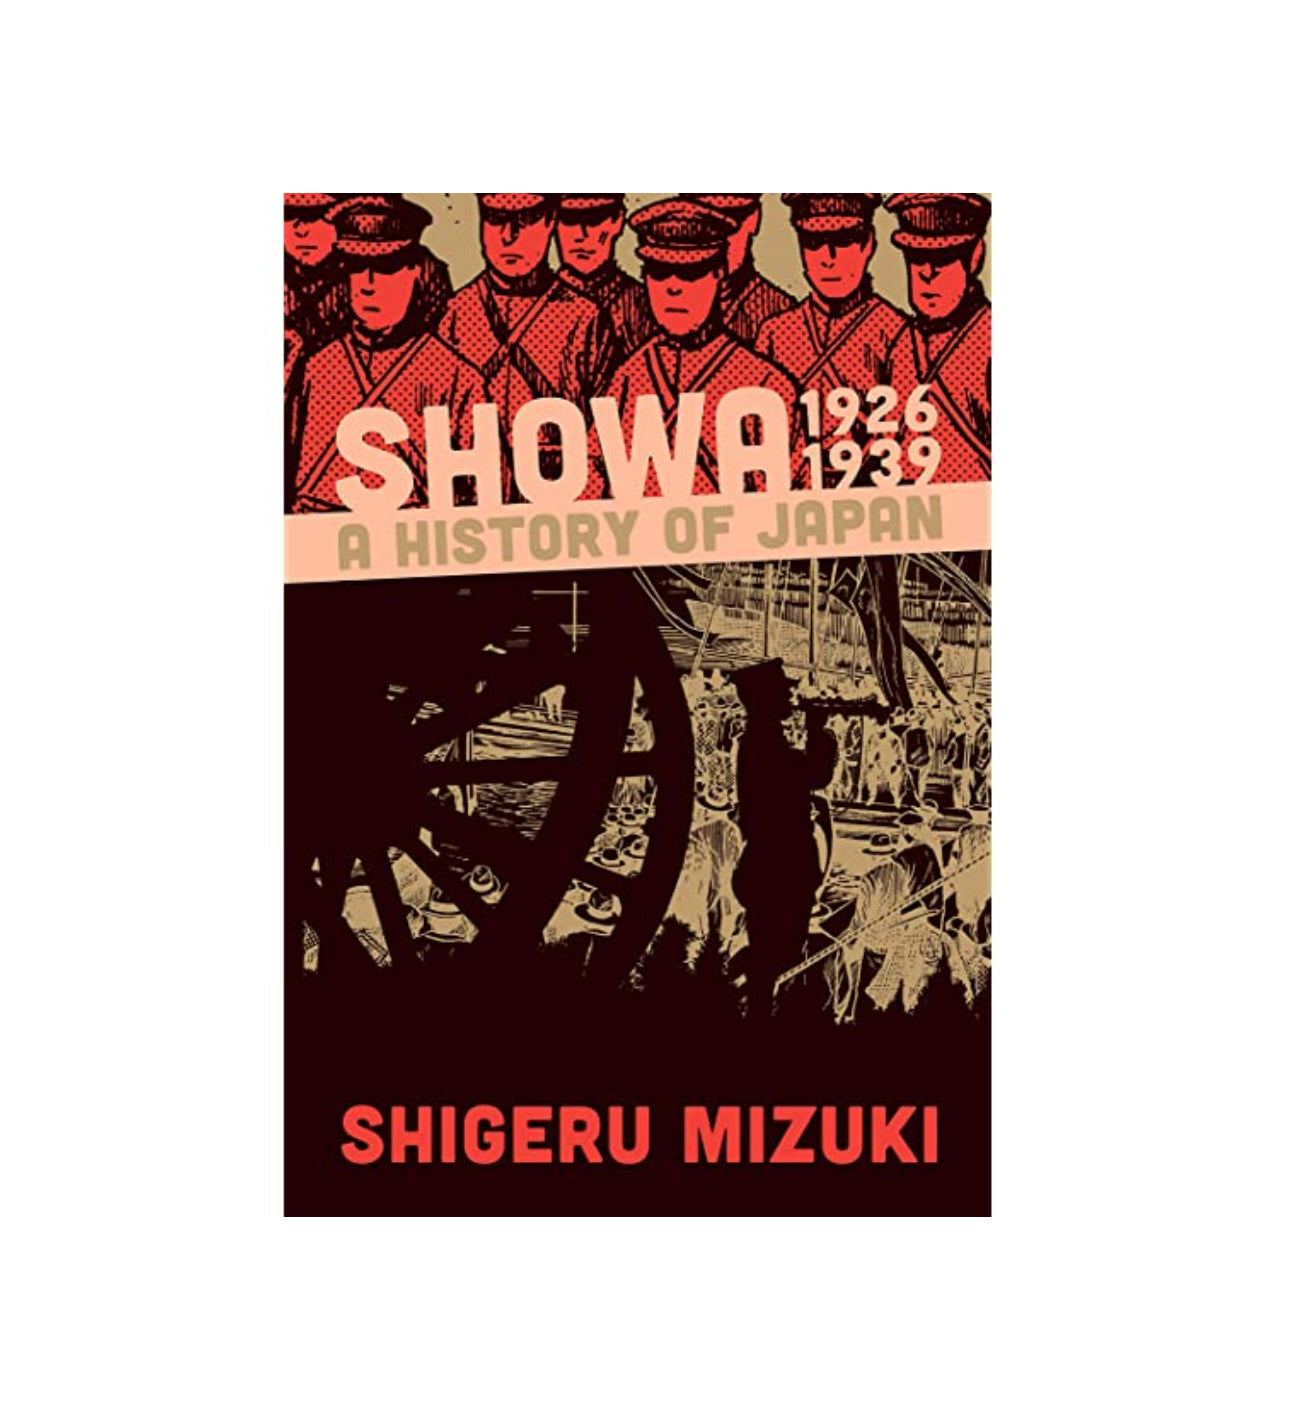 SHOWA: A HISTORY OF JAPAN 1926-1939